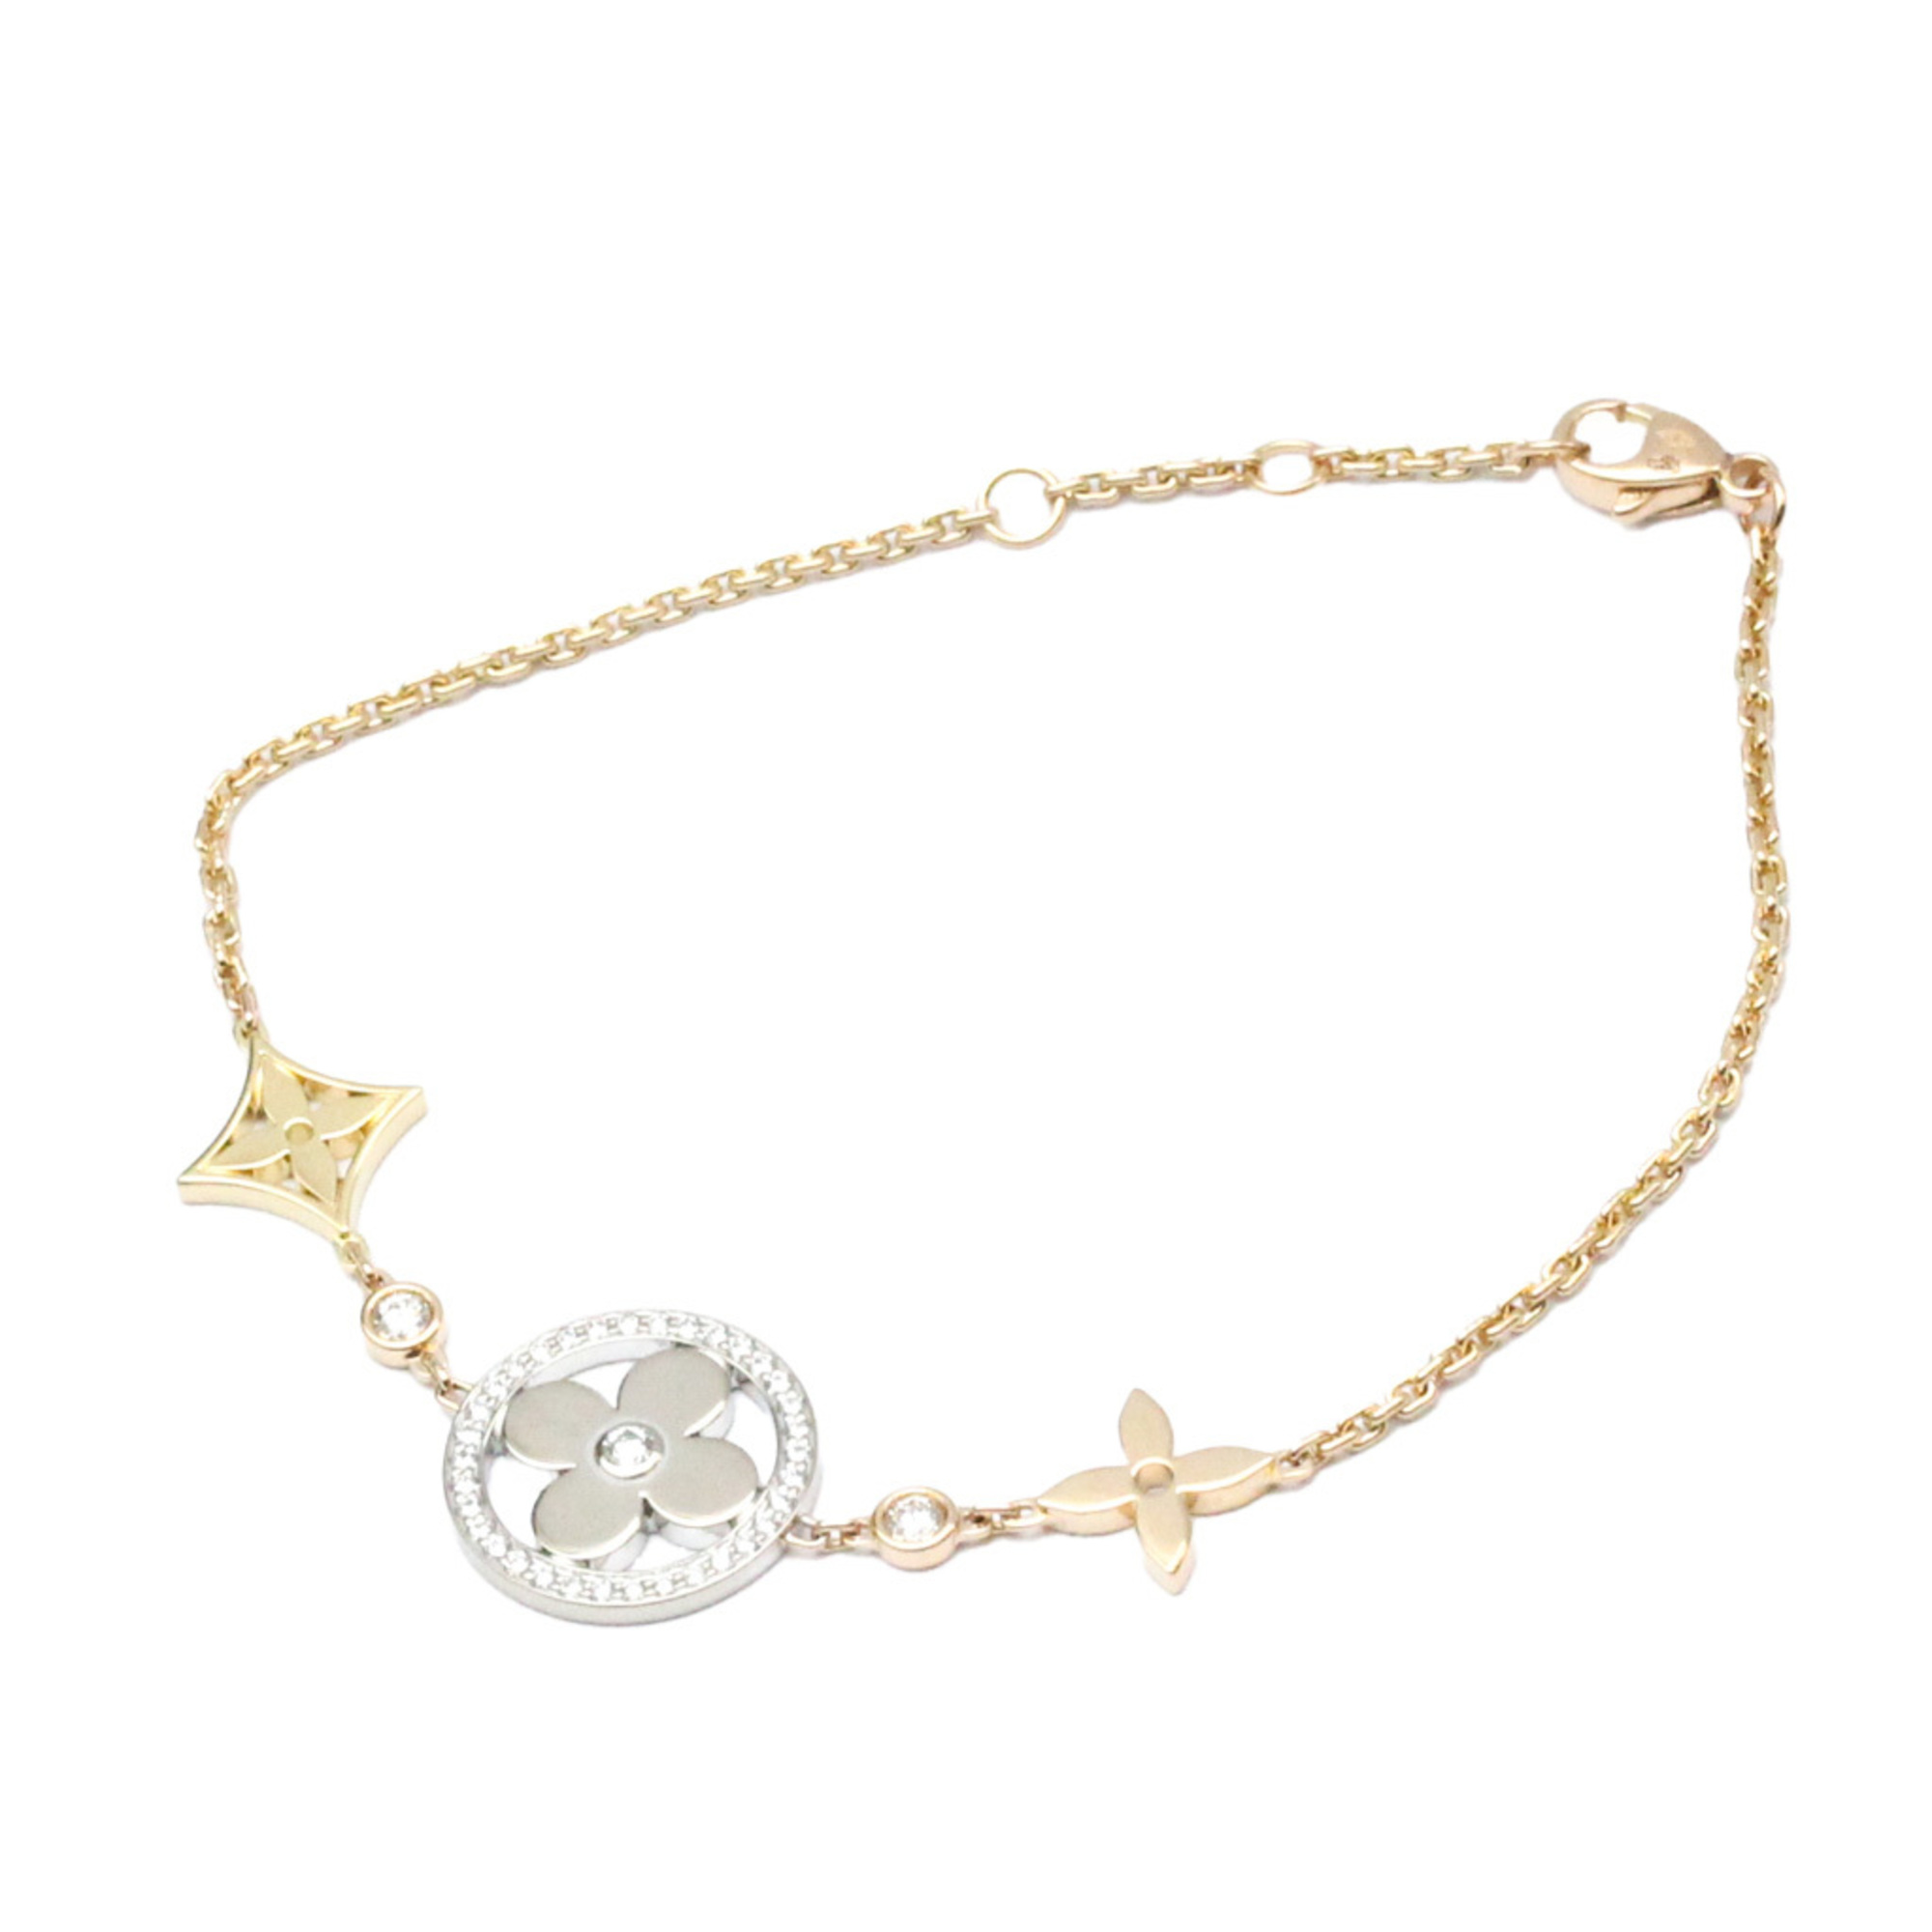 Louis Vuitton Idylle Blossom XL Bracelet, 3 Golds And Diamonds Q95443 Pink Gold (18K),White Gold (18K),Yellow Gold (18K) Diamond Charm Bracelet Gold